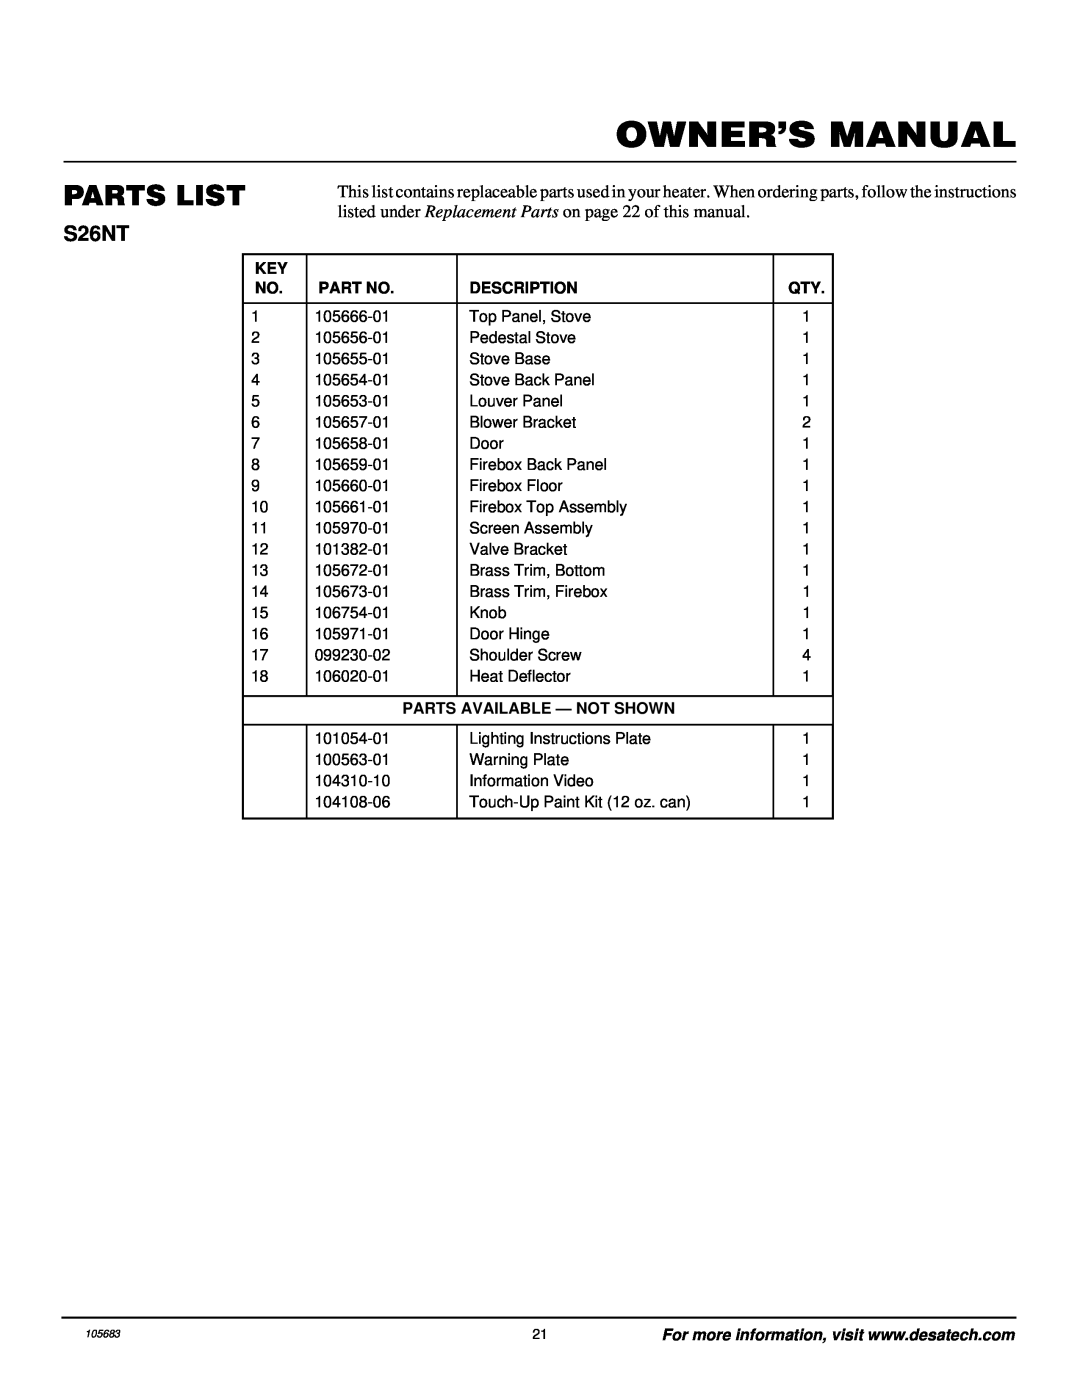 Desa S26NT installation manual Owner’S Manual, Parts List, Description, Parts Available - Not Shown 